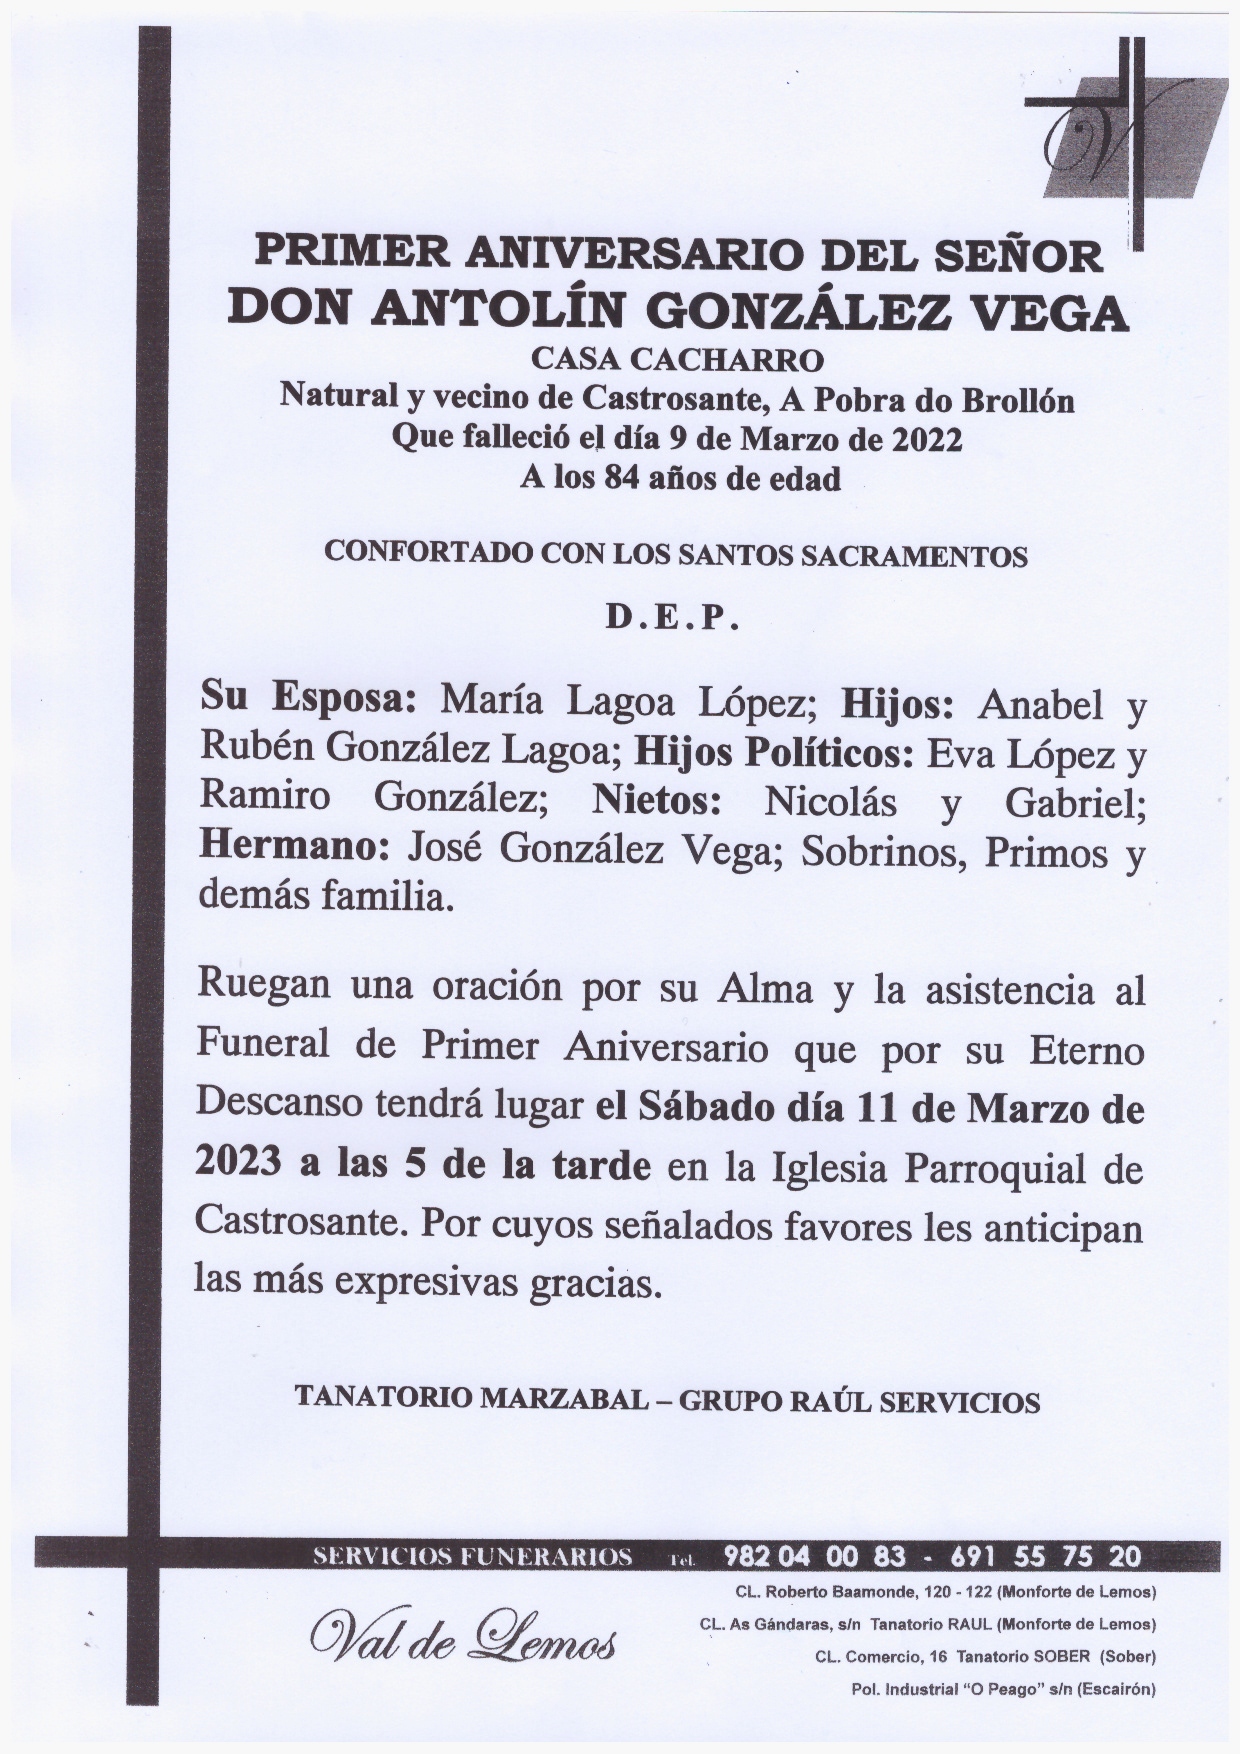 PRIMER ANIVERSARIO DE DON ANTOLIN GONZALEZ VEGA